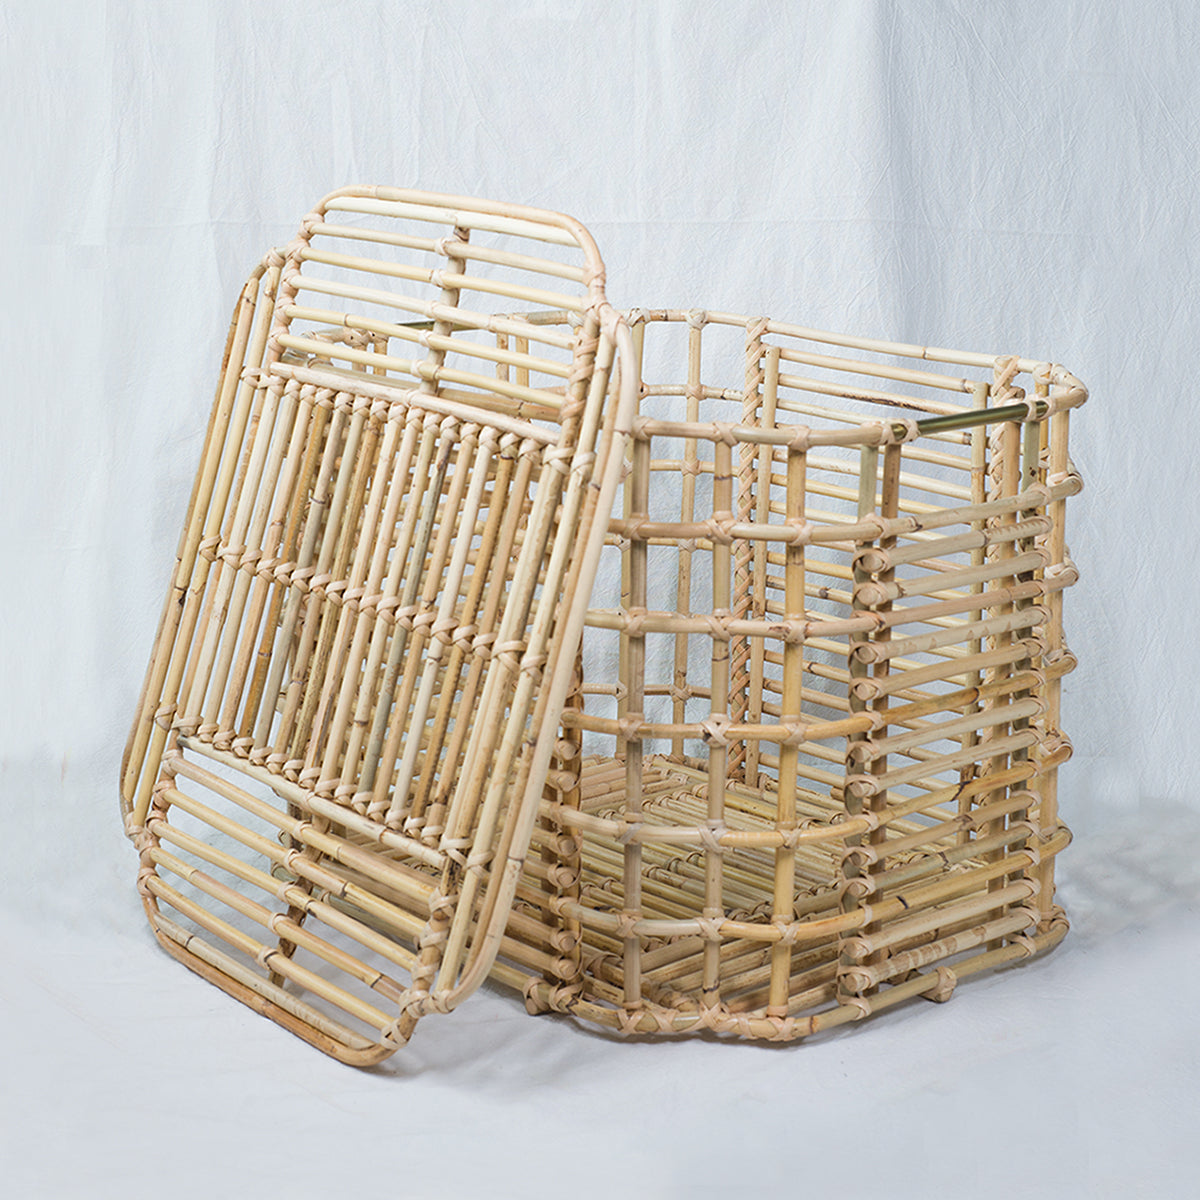 ART DECO Cane Basket with Lid - Natural - Large